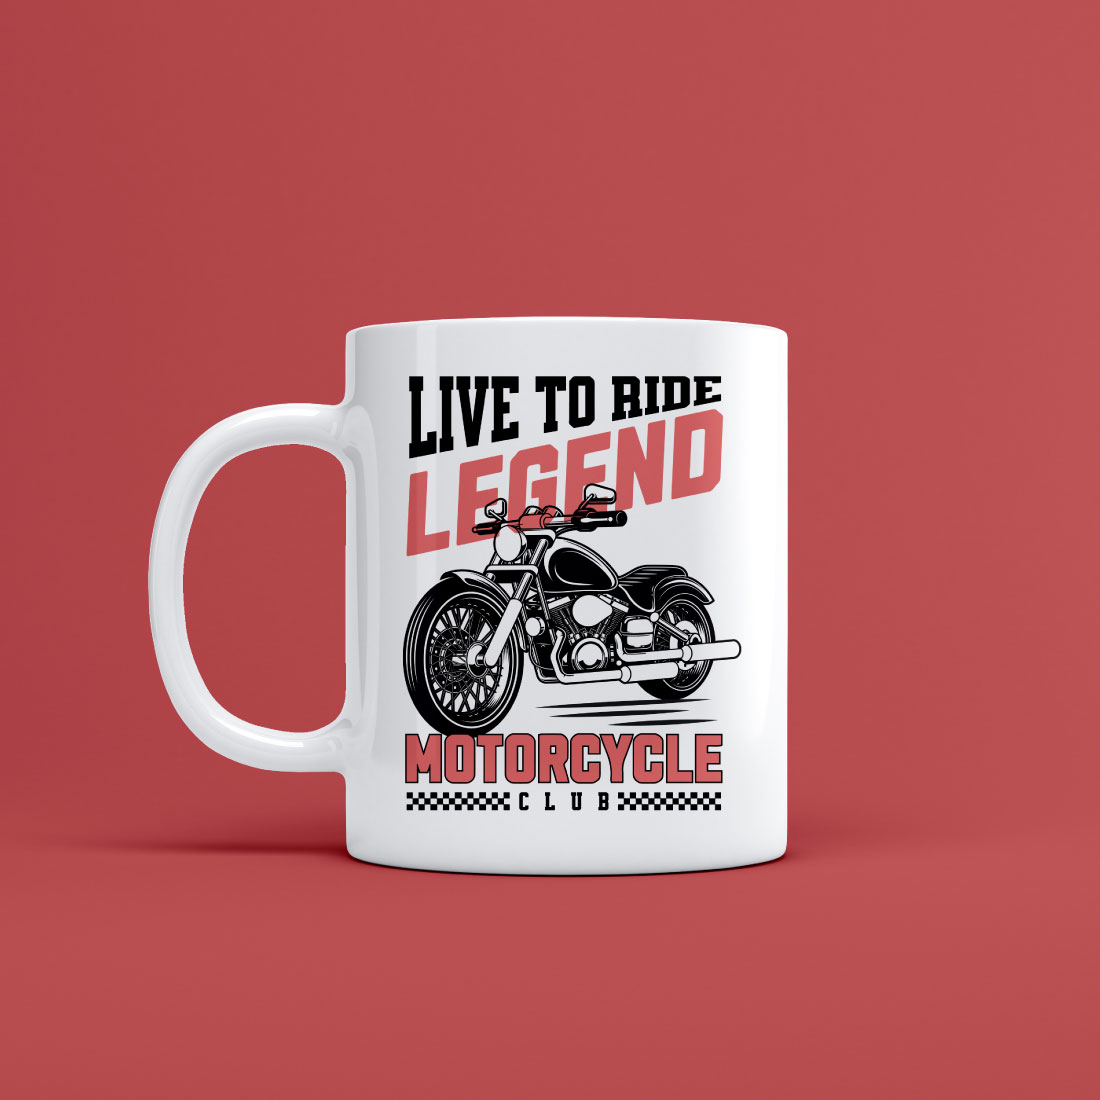 live to ride legend motorcycle club mug design 949